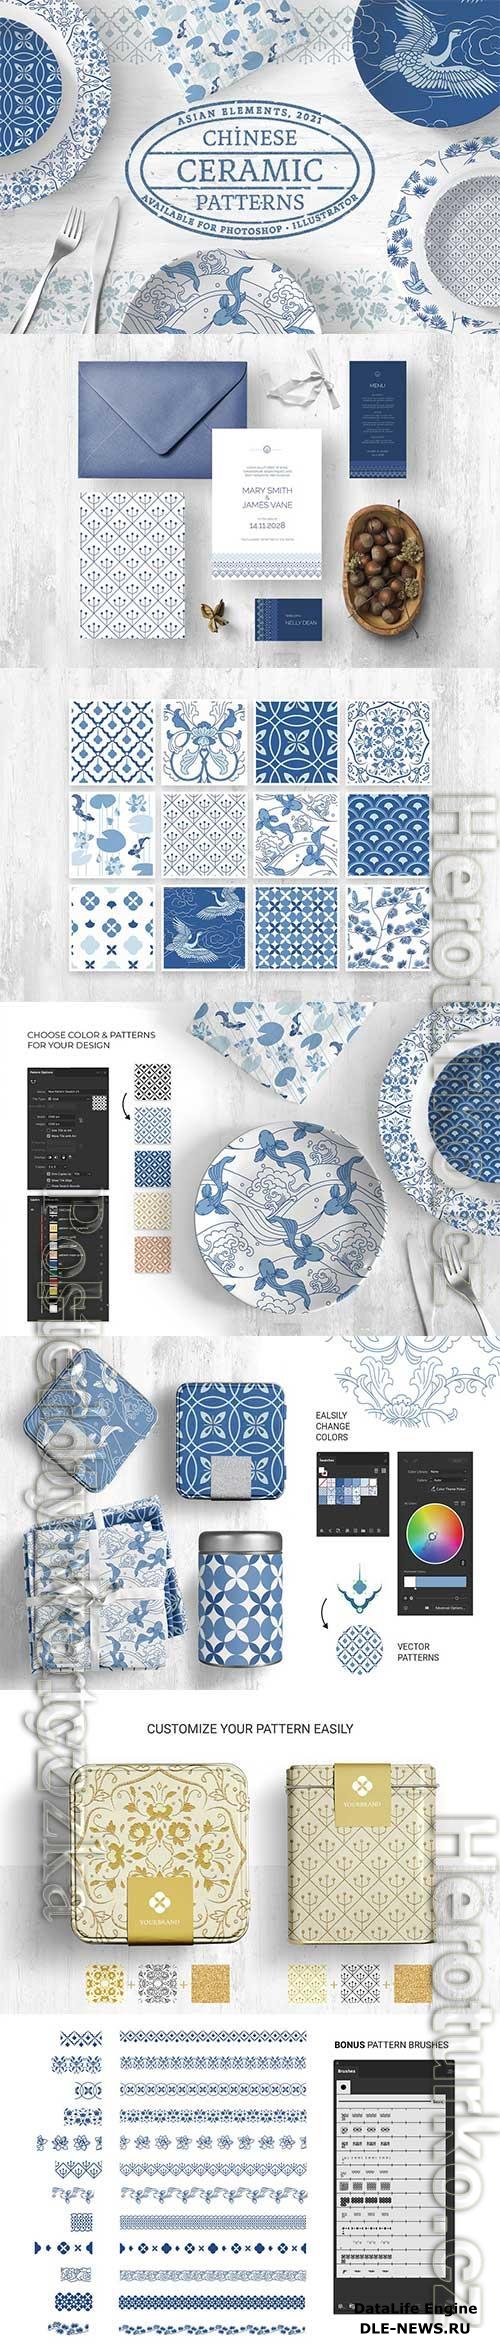 Chinese Ceramic Patterns